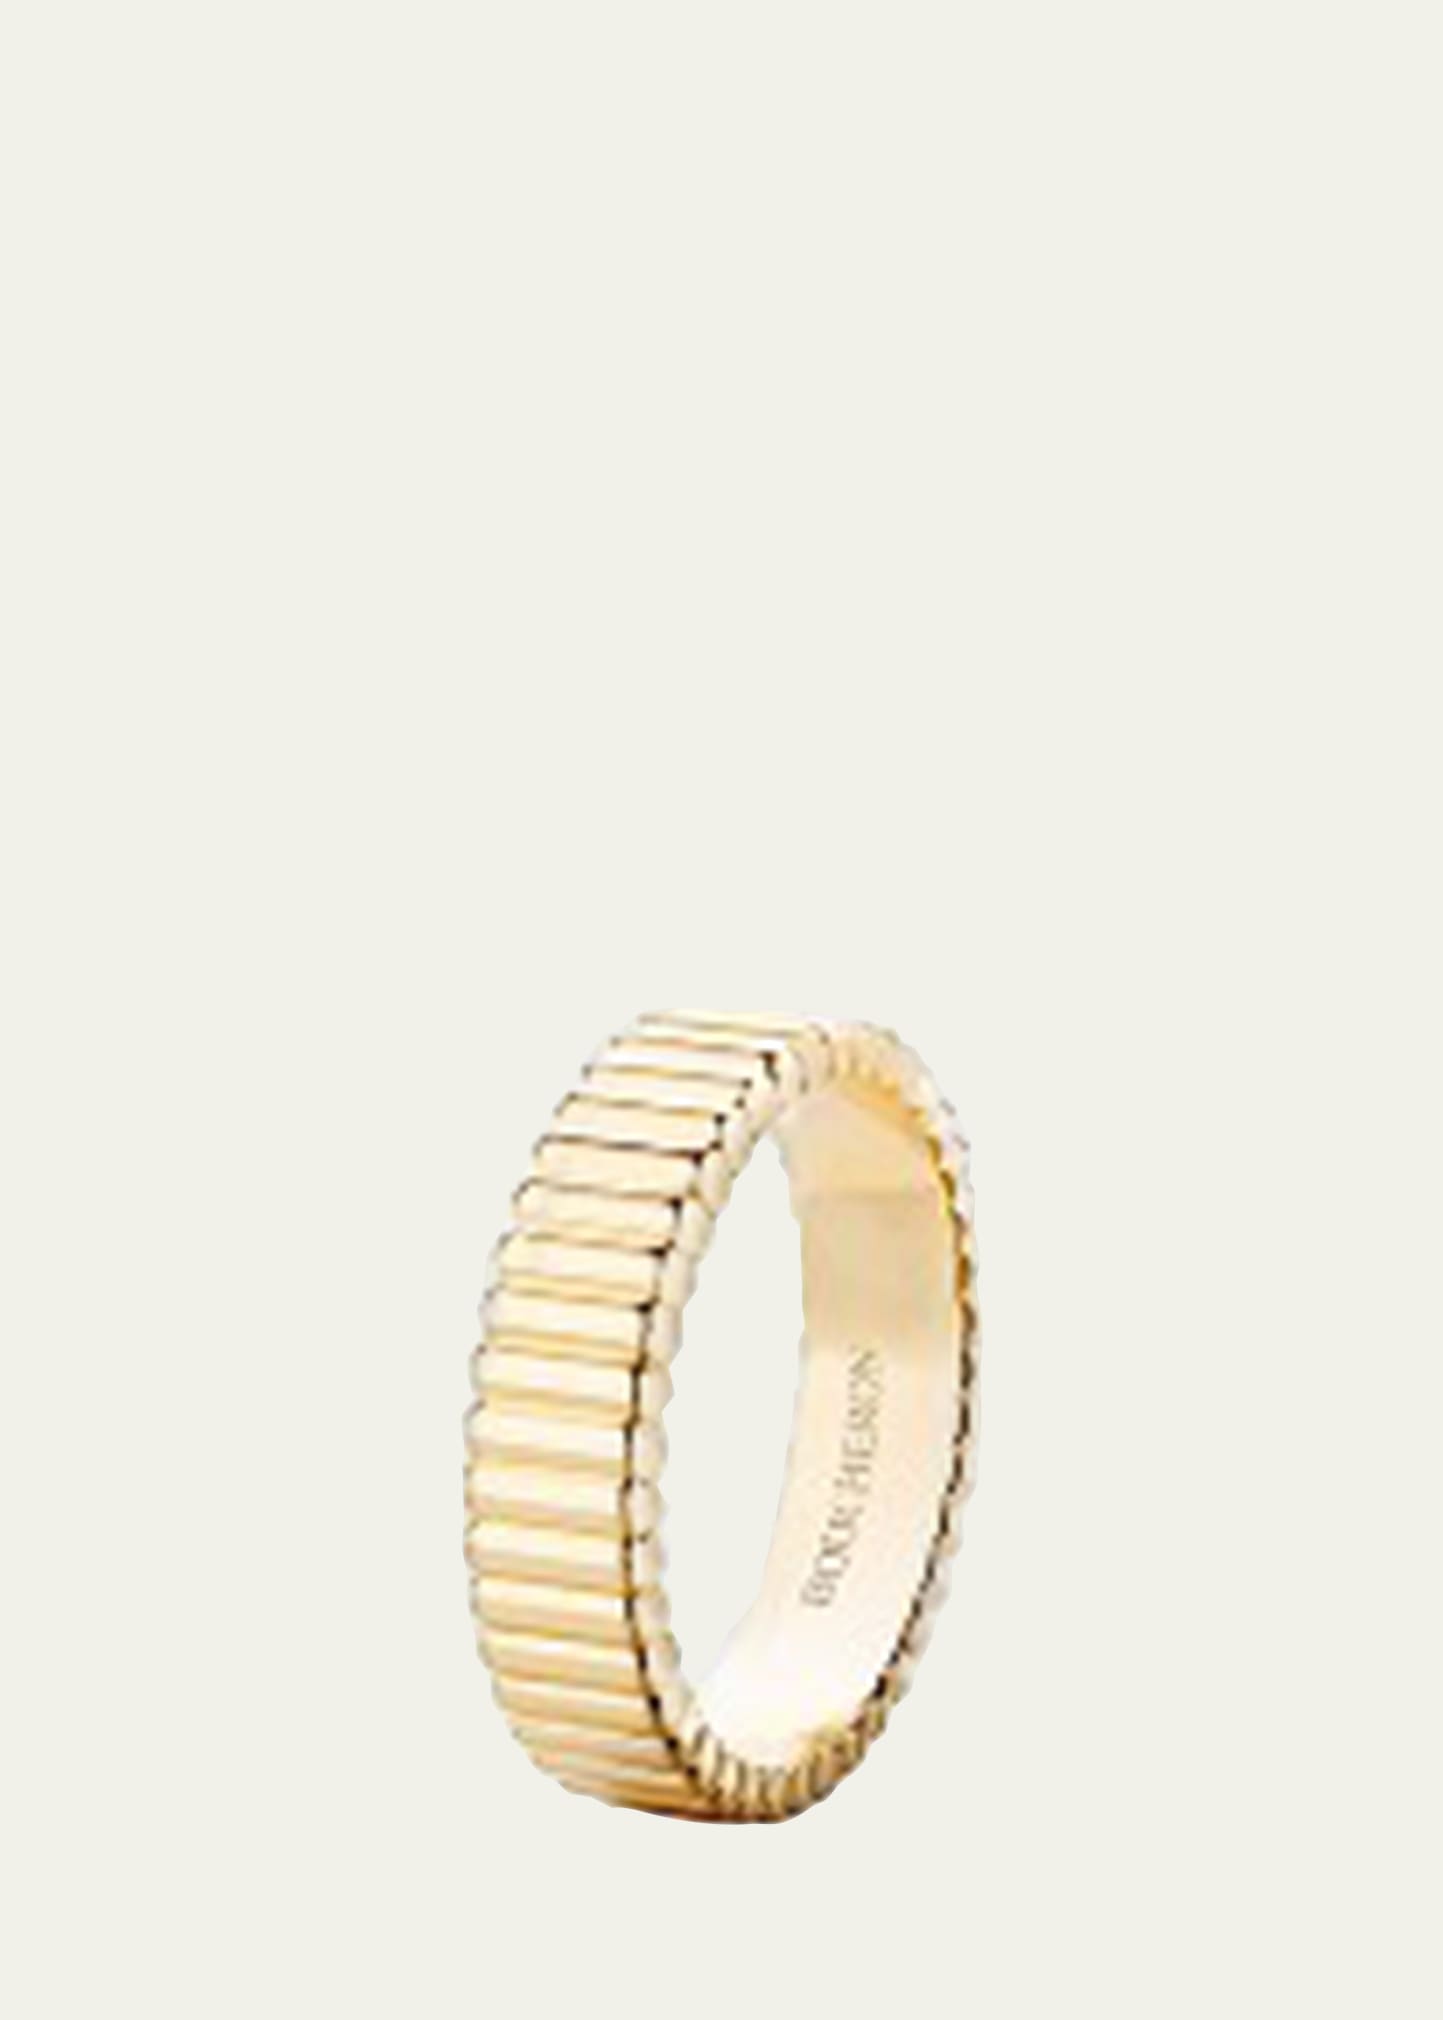 Boucheron Quatre Crosgrain Ring in Yellow Gold, Size 6-9